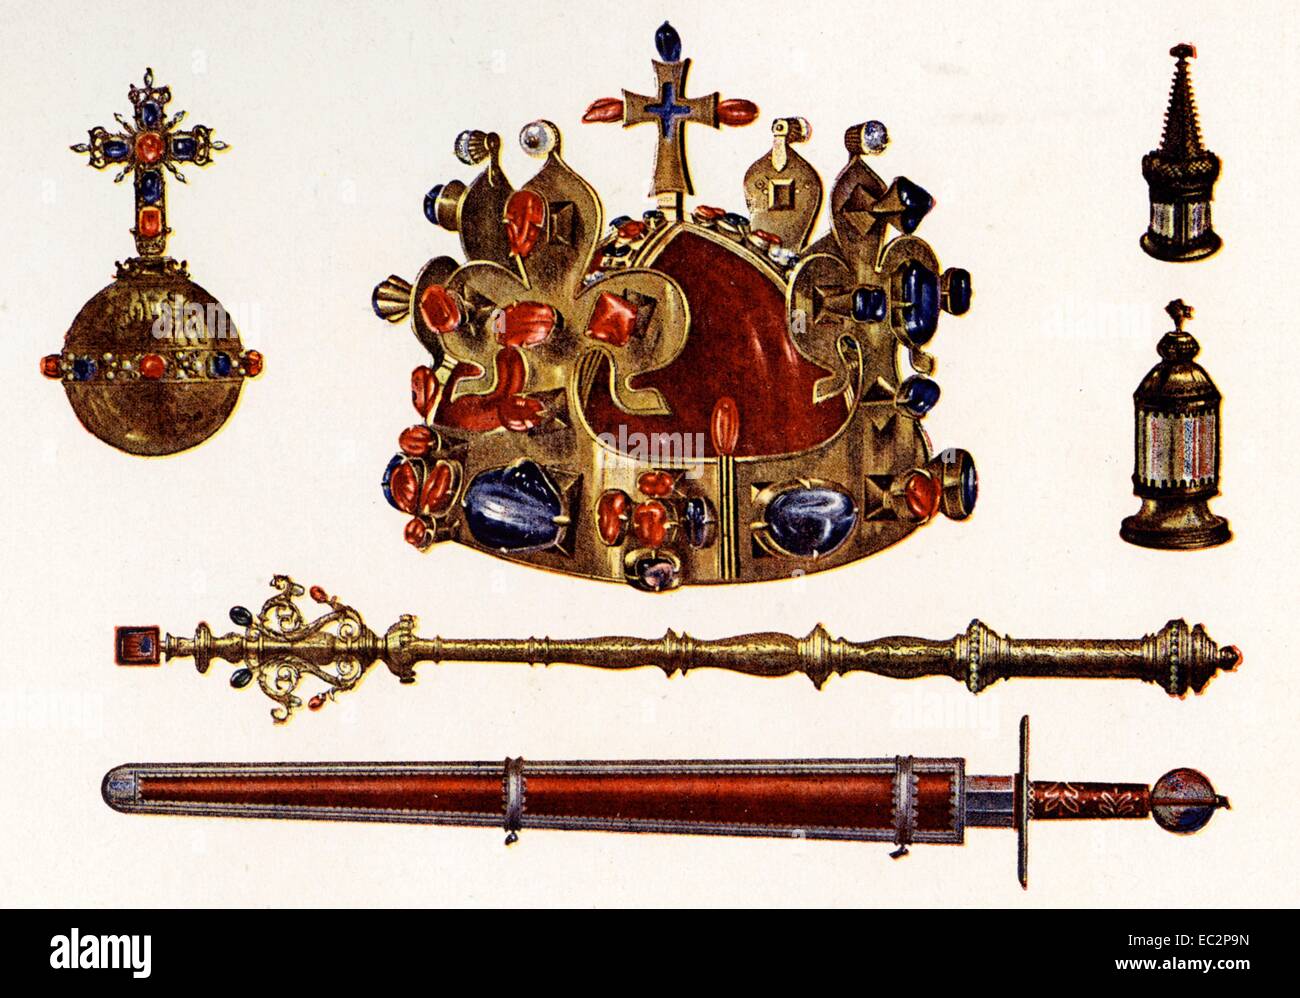 Las Joyas de la corona bohemia, a veces llamado las joyas de la corona checa Foto de stock